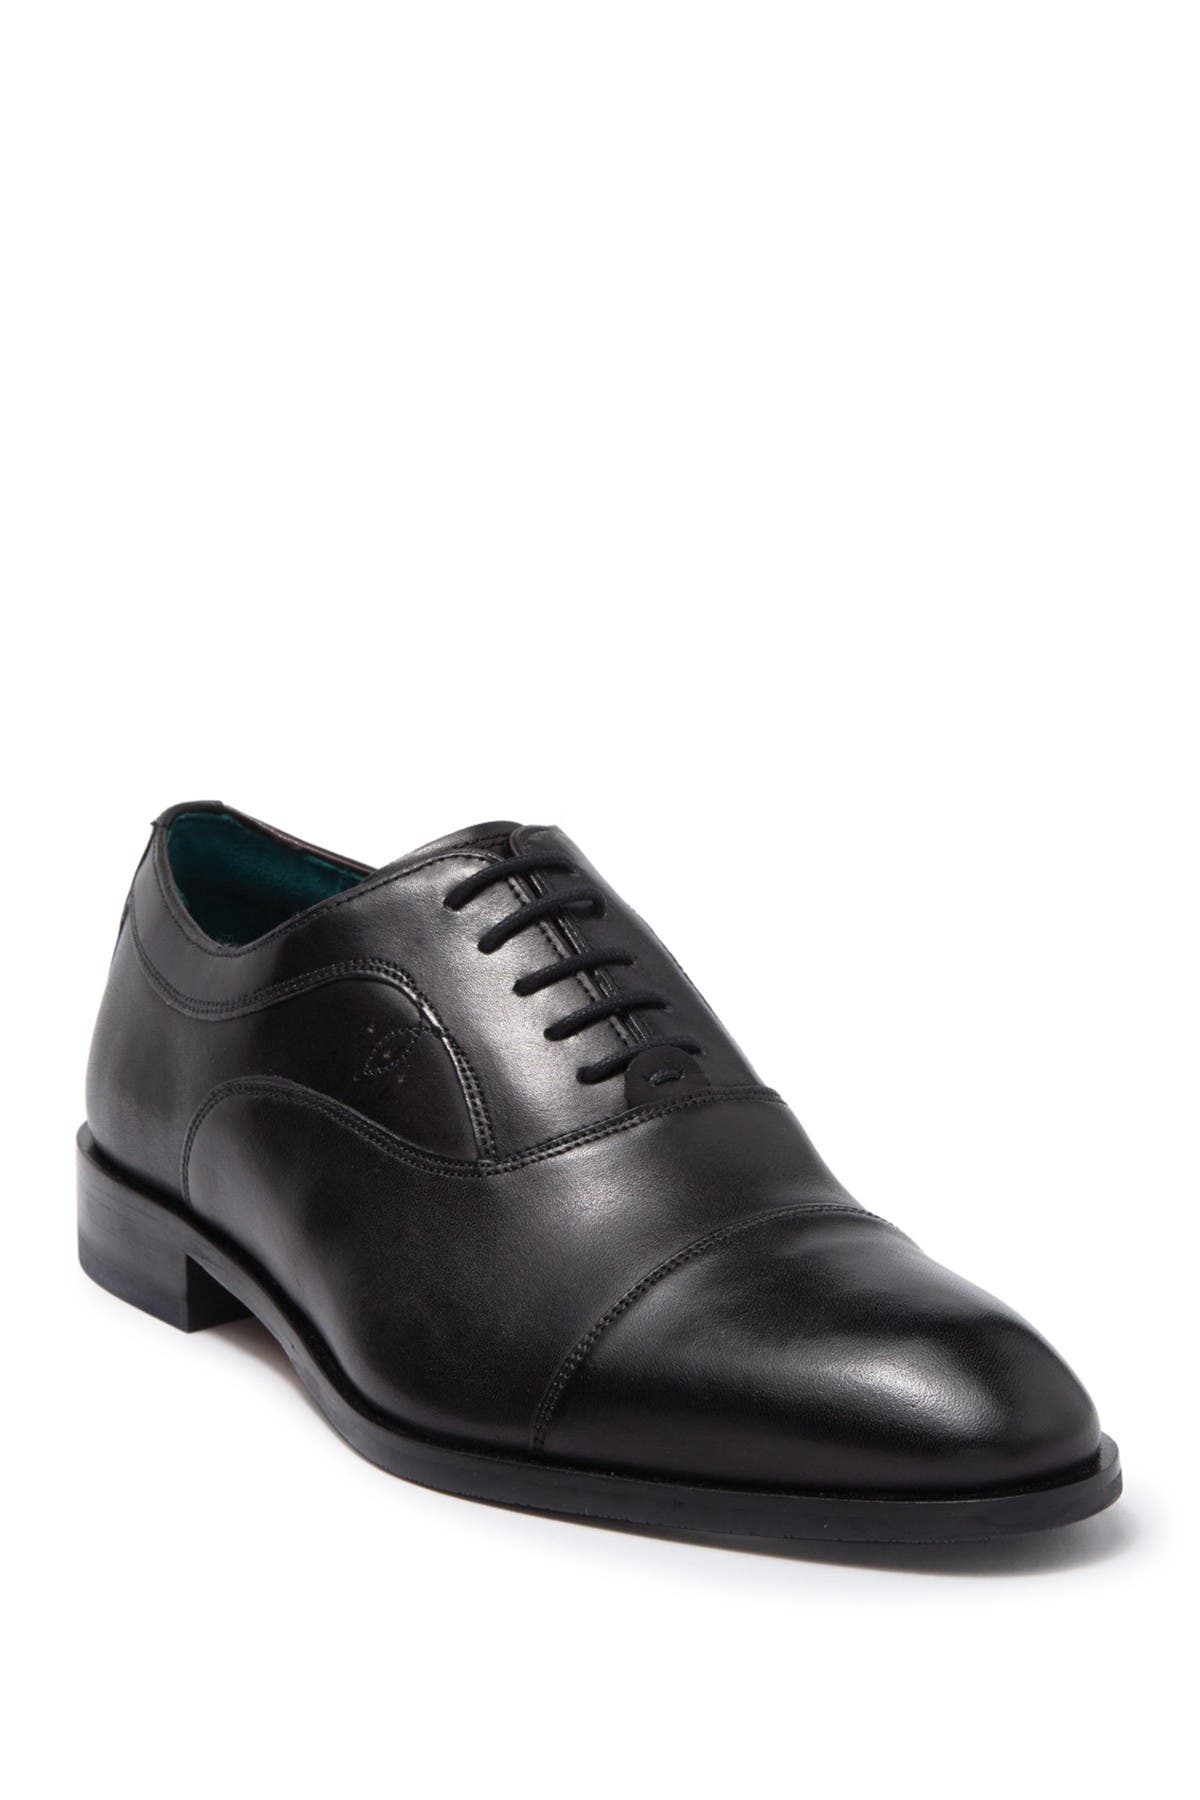 Ted Baker London Shoes for Men 